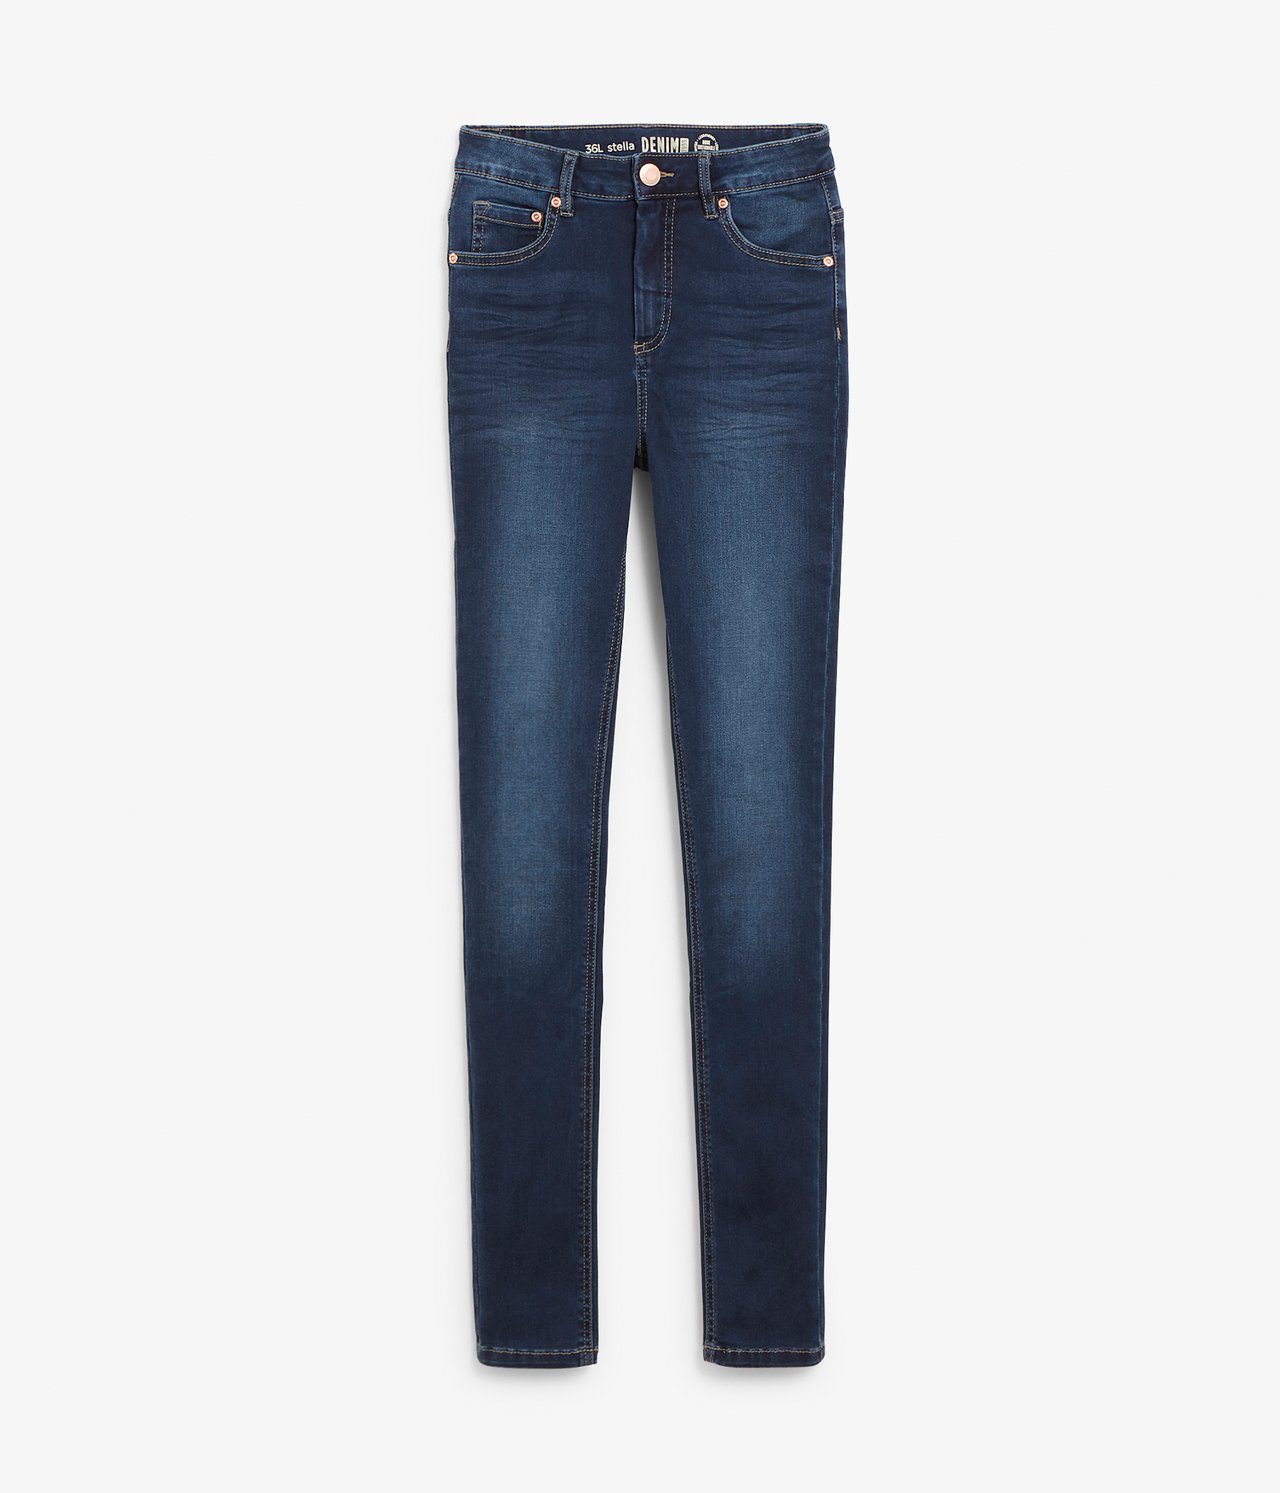 Super slim jeans extra long leg - Mörk denim - 6